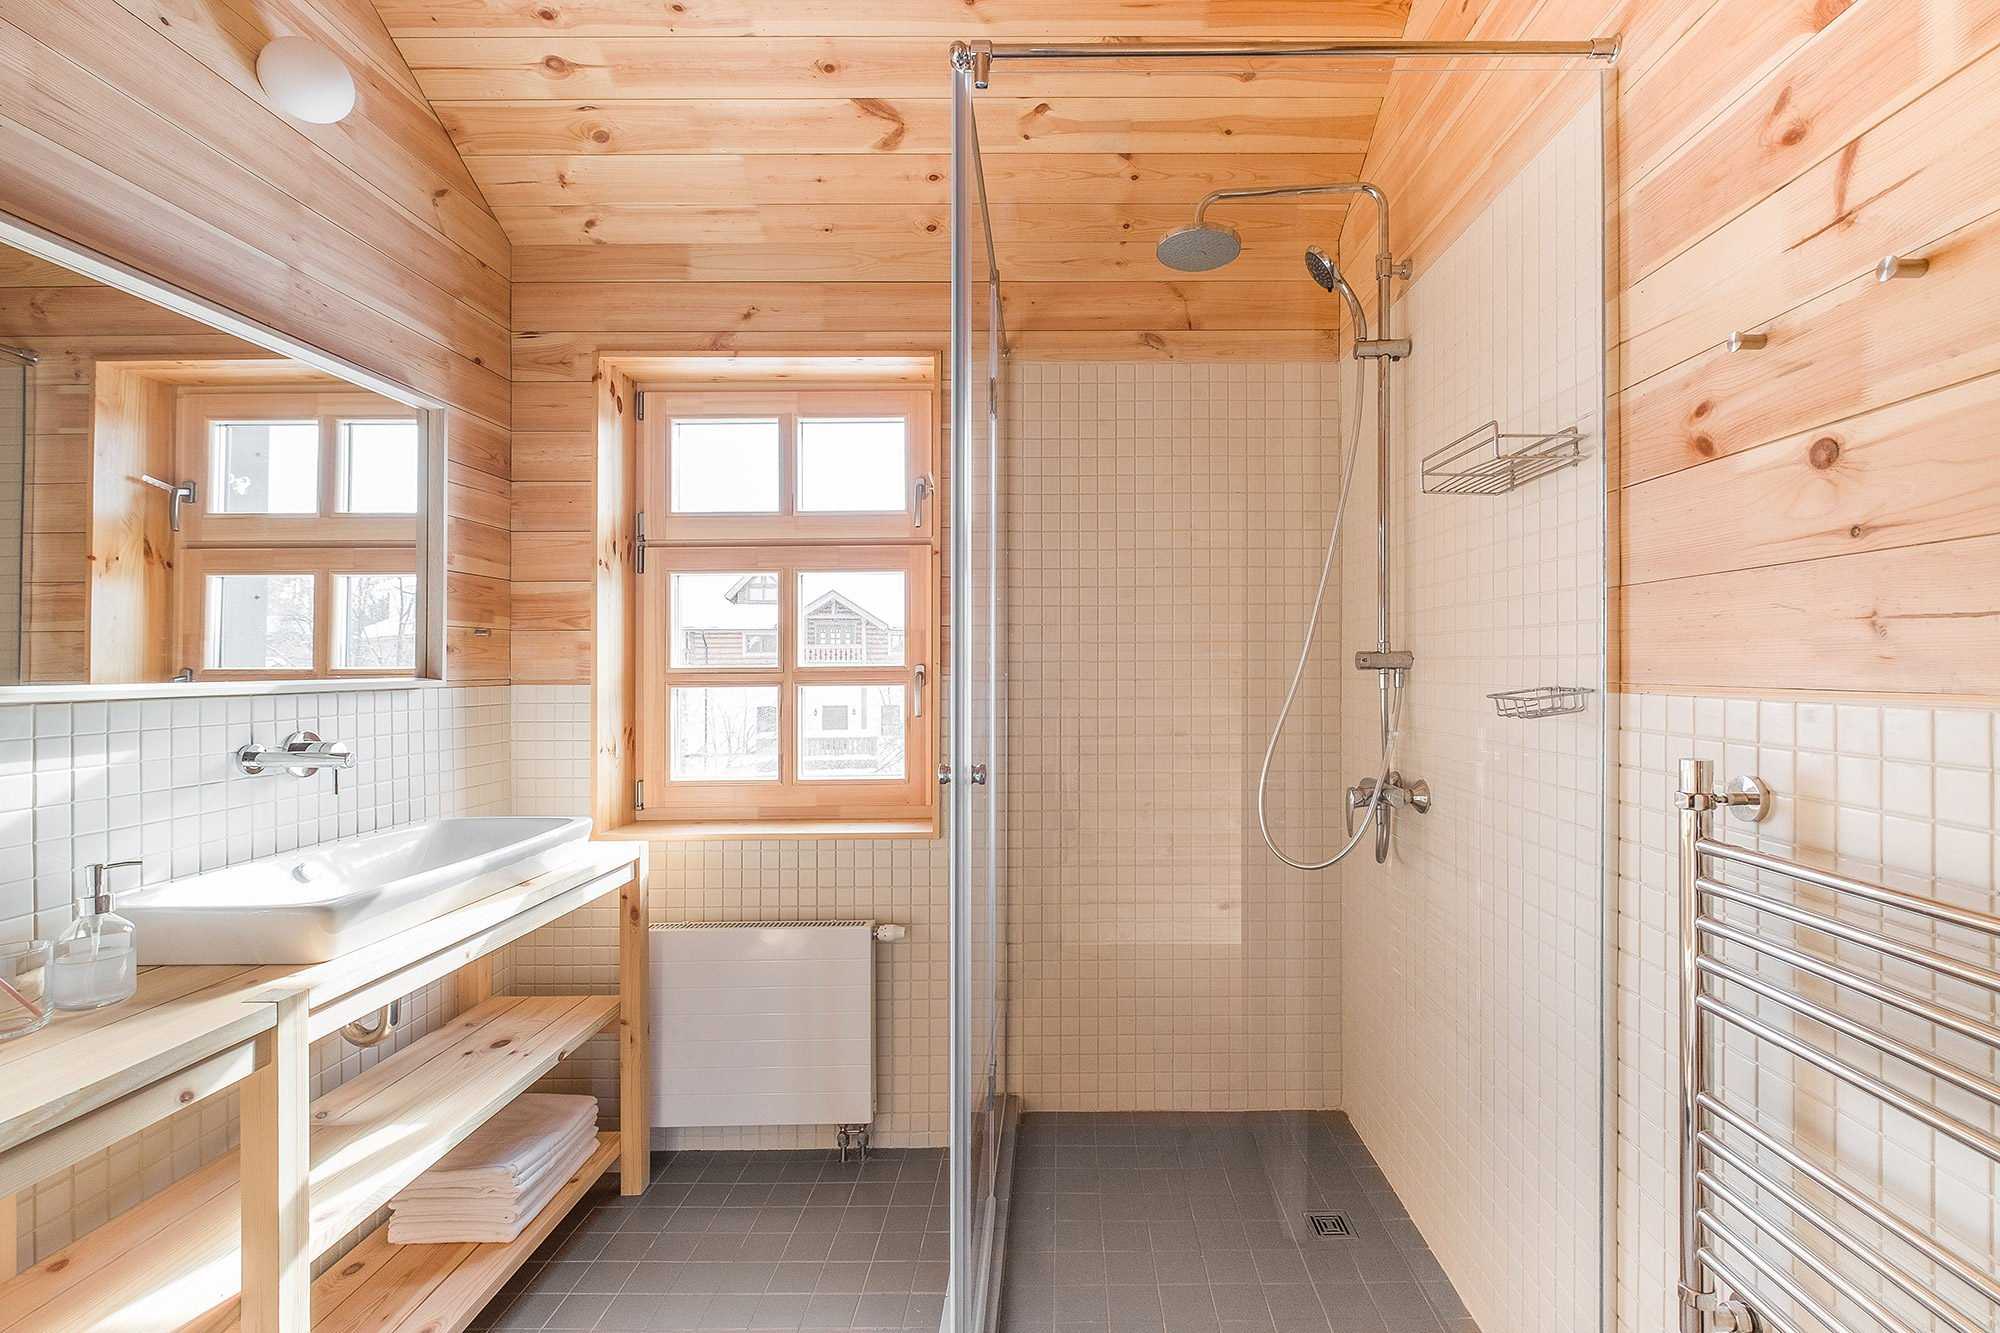 Ванная комната в деревянном доме обмазочная гидроизоляция и пароизоляция пола